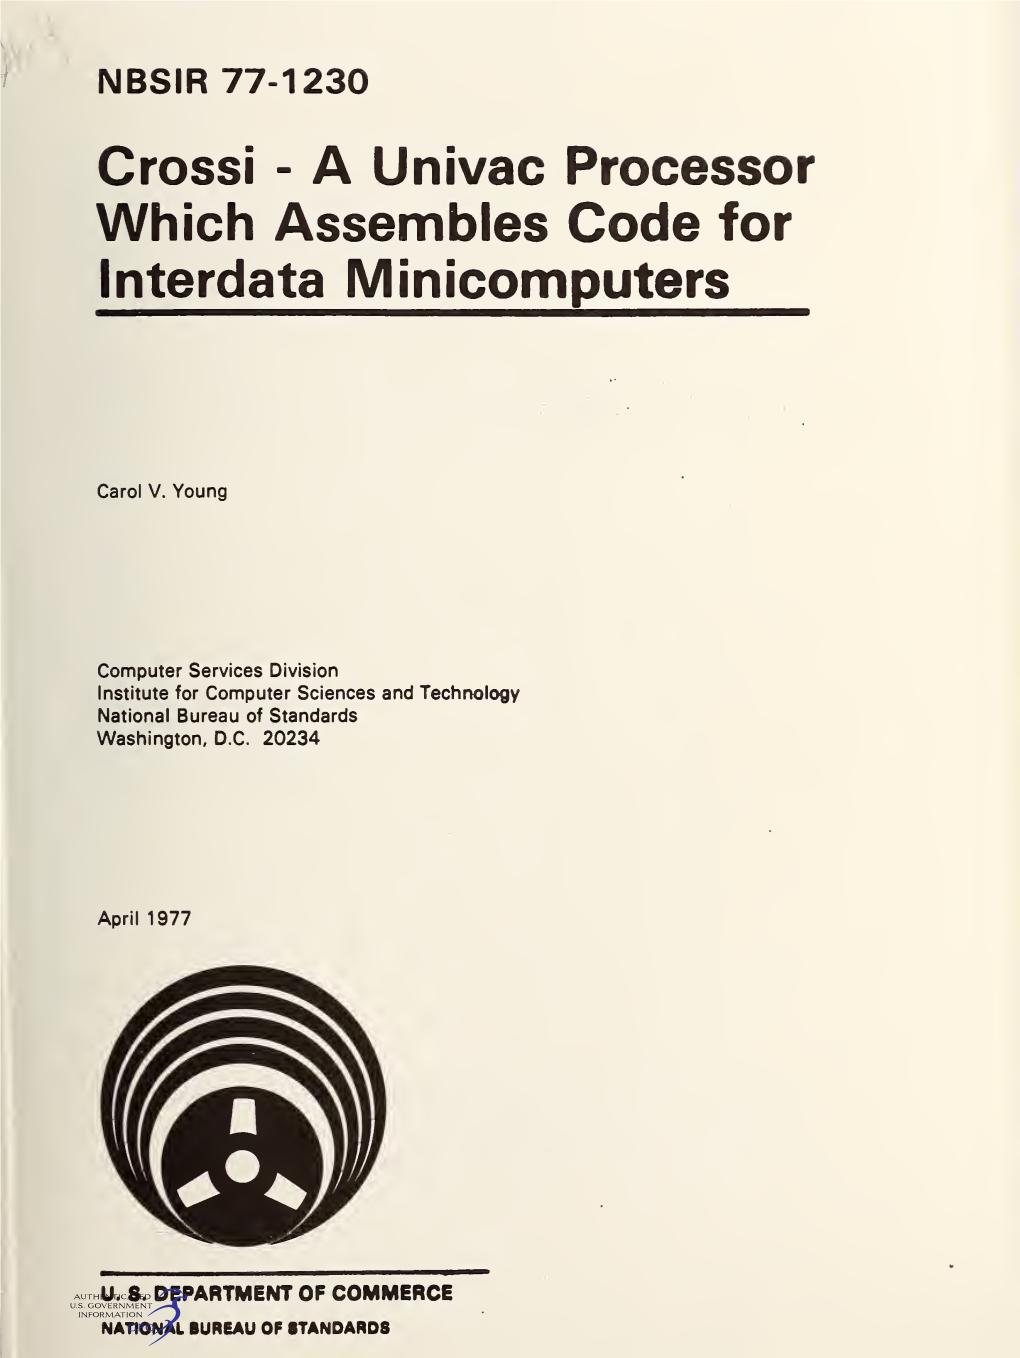 A Univac Processor Which Assembles Code for Interdata Minicomputers